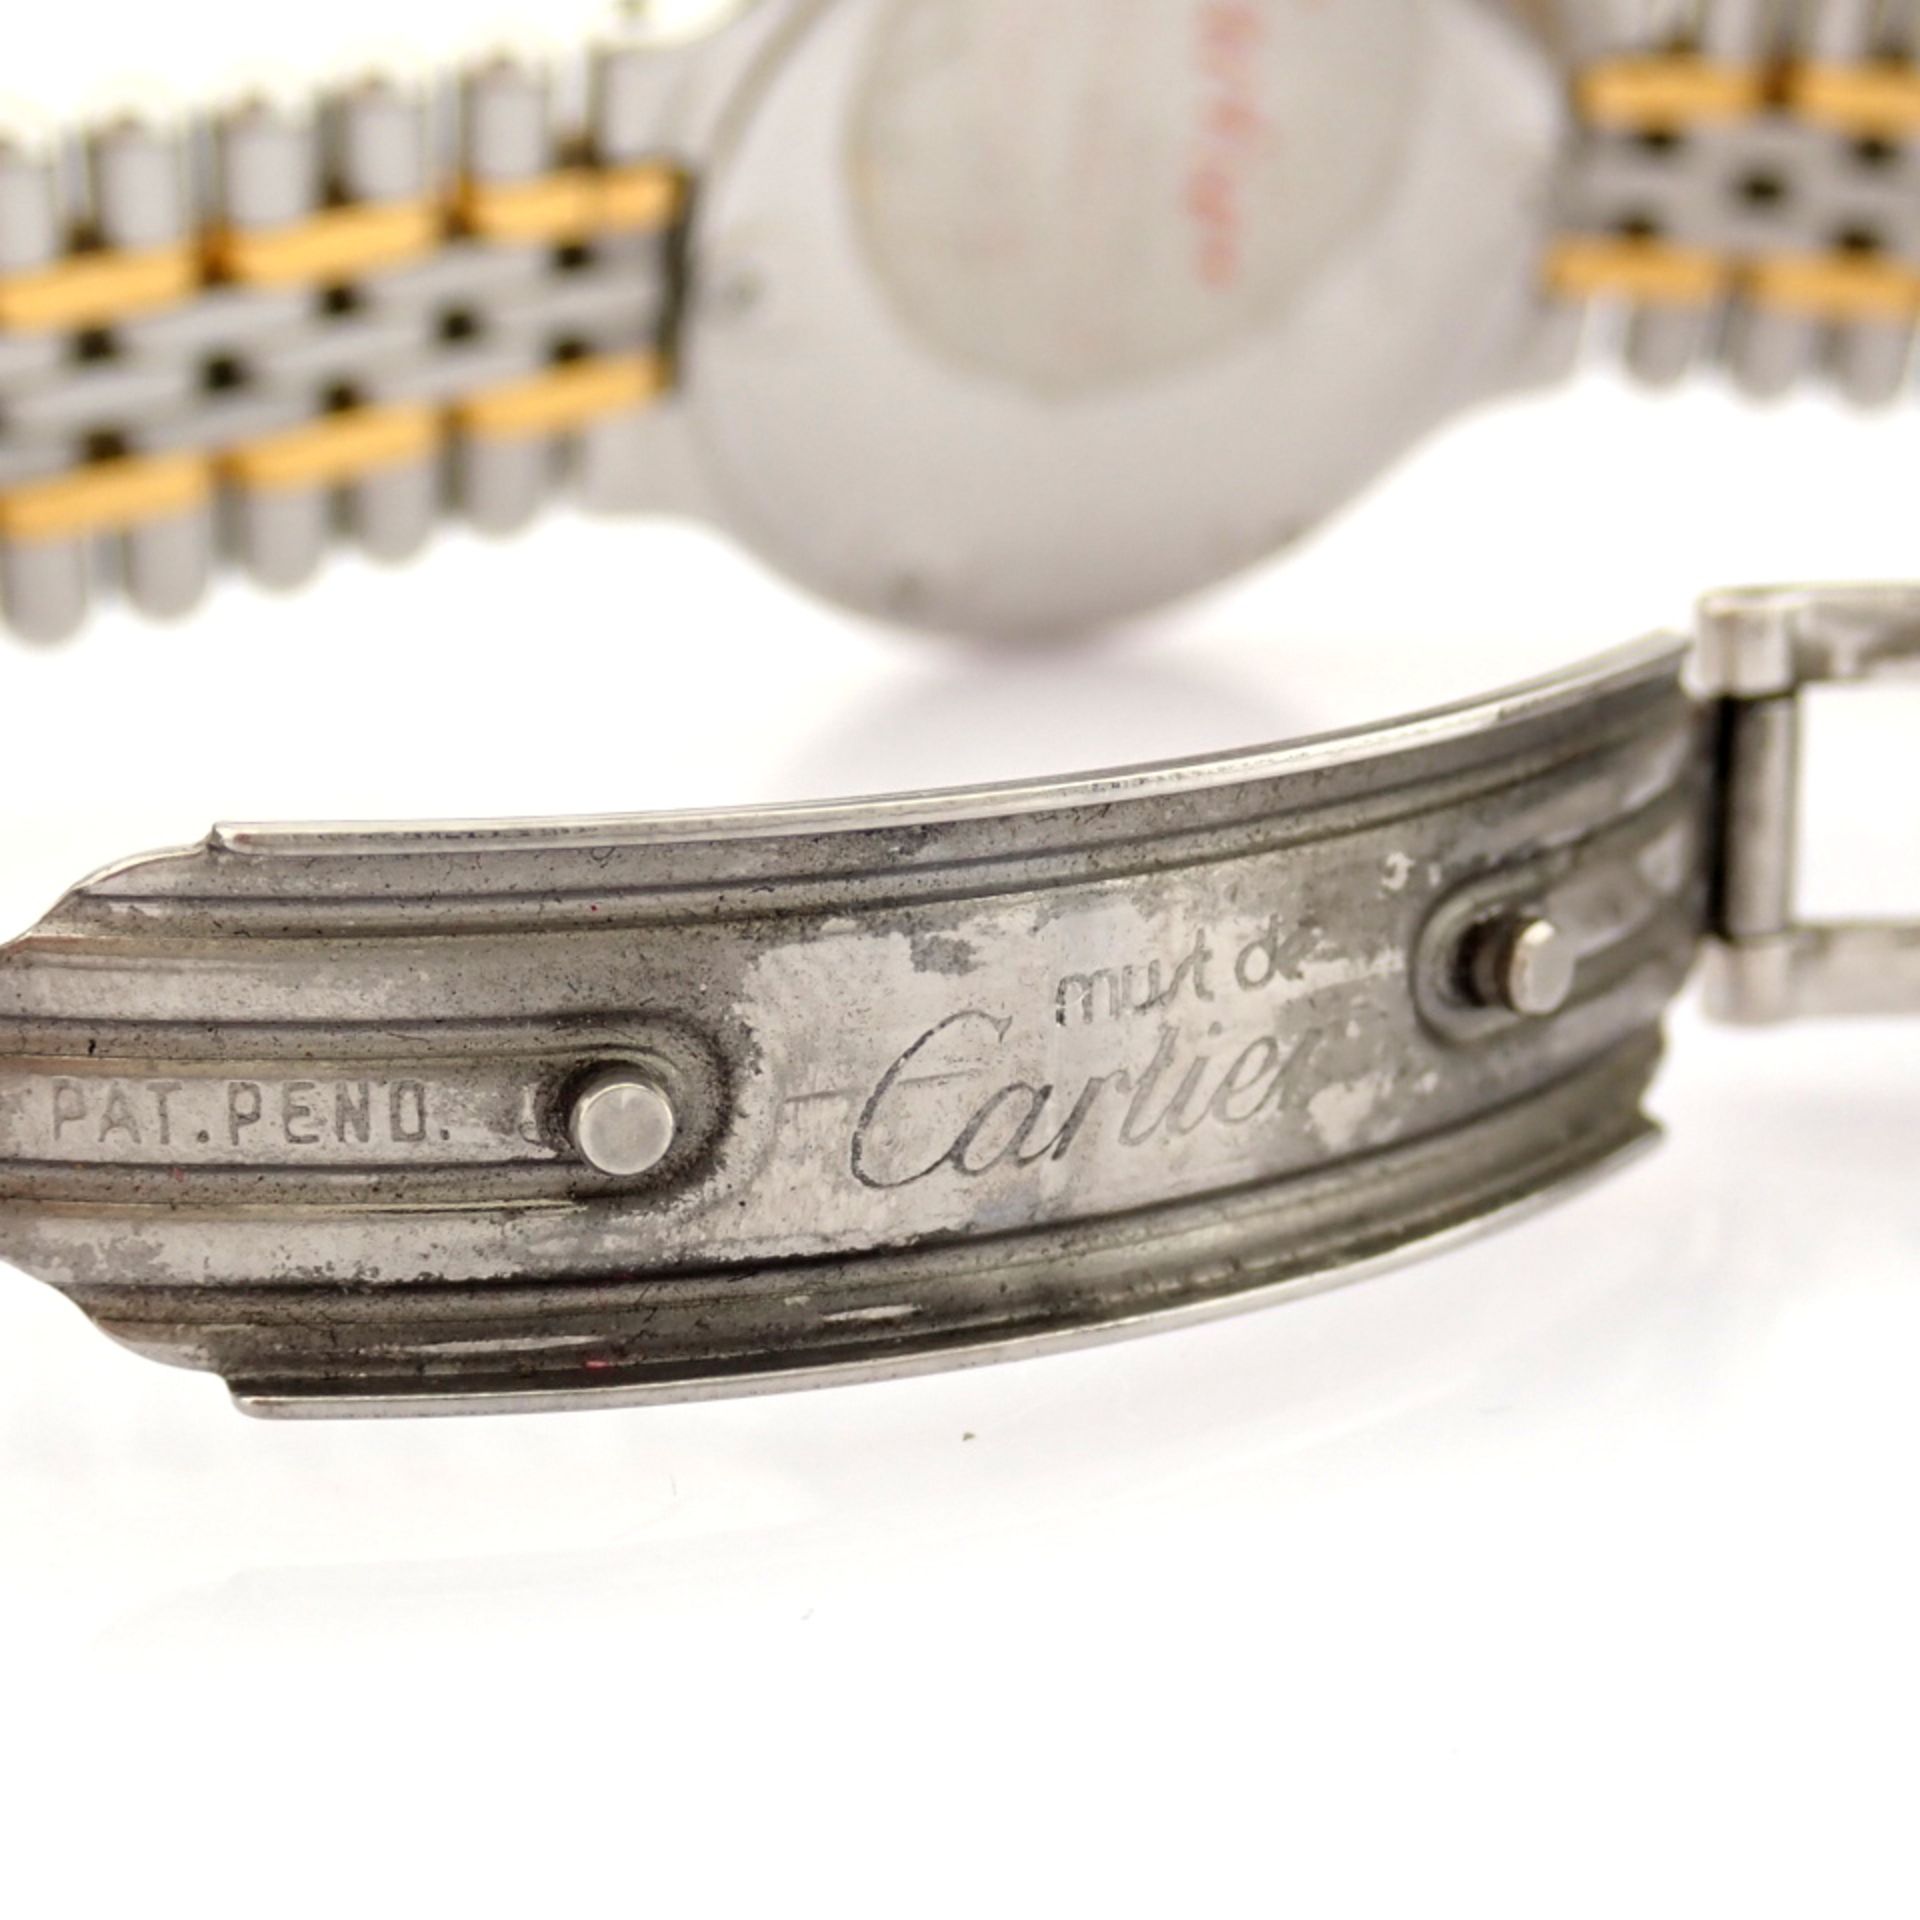 Cartier / Must de Cartier - Lady's Gold/Steel Wrist Watch - Image 10 of 10